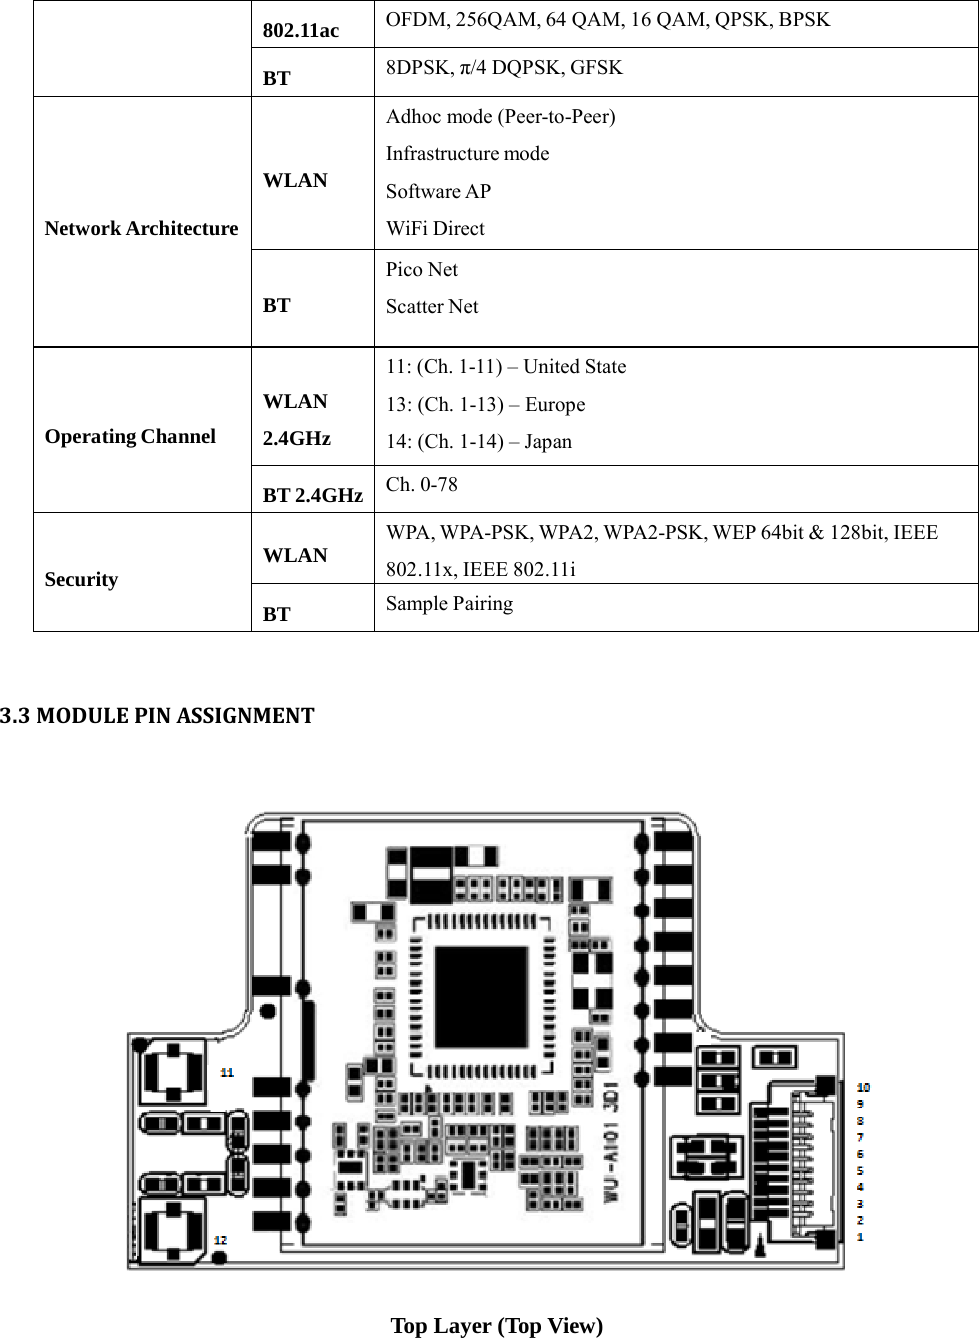 802.11ac OFDM, 256QAM, 64 QAM, 16 QAM, QPSK, BPSK BT 8DPSK, π/4 DQPSK, GFSK Network Architecture WLAN Adhoc mode (Peer-to-Peer) Infrastructure mode Software AP WiFi Direct BT Pico Net Scatter Net Operating Channel WLAN 2.4GHz 11: (Ch. 1-11) – United State13: (Ch. 1-13) – Europe 14: (Ch. 1-14) – Japan BT 2.4GHz Ch. 0-78 Security WLAN WPA, WPA-PSK, WPA2, WPA2-PSK, WEP 64bit &amp; 128bit, IEEE 802.11x, IEEE 802.11i BT Sample Pairing 3.3MODULEPINASSIGNMENTTop Layer (Top View) 